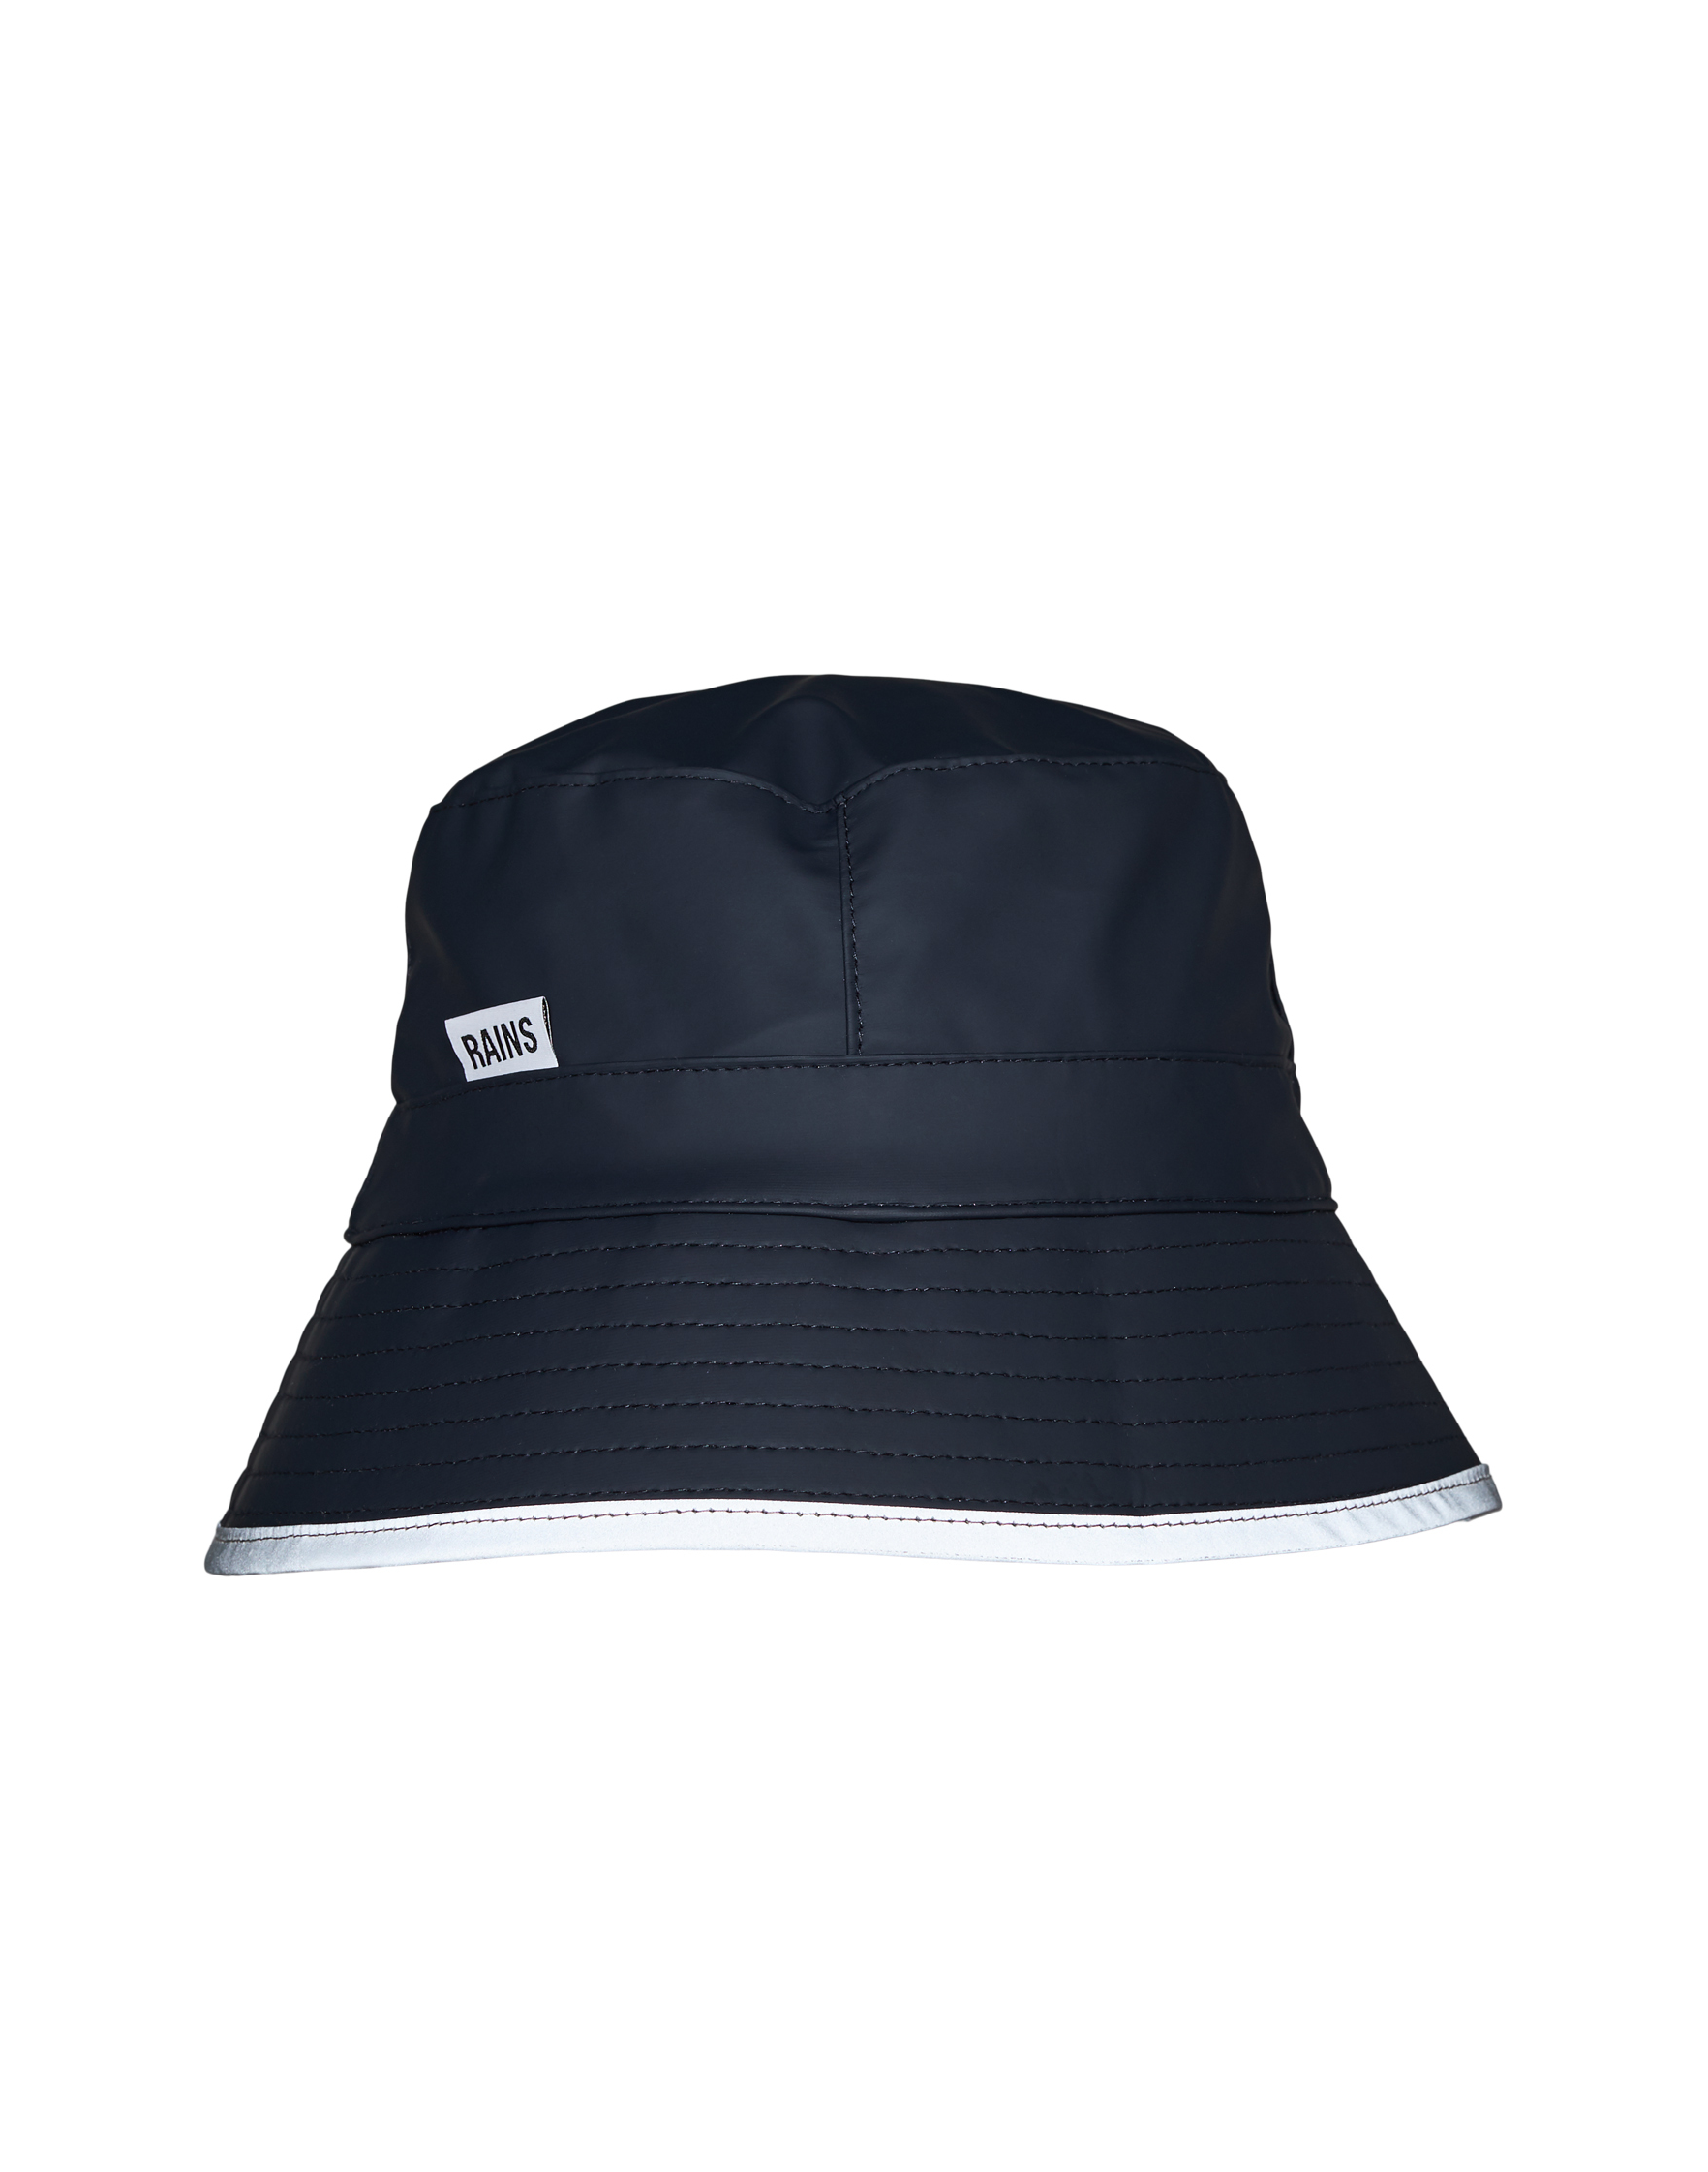 Rains 14070-54 Bucket Hat Navy Reflective Accessories  Hats